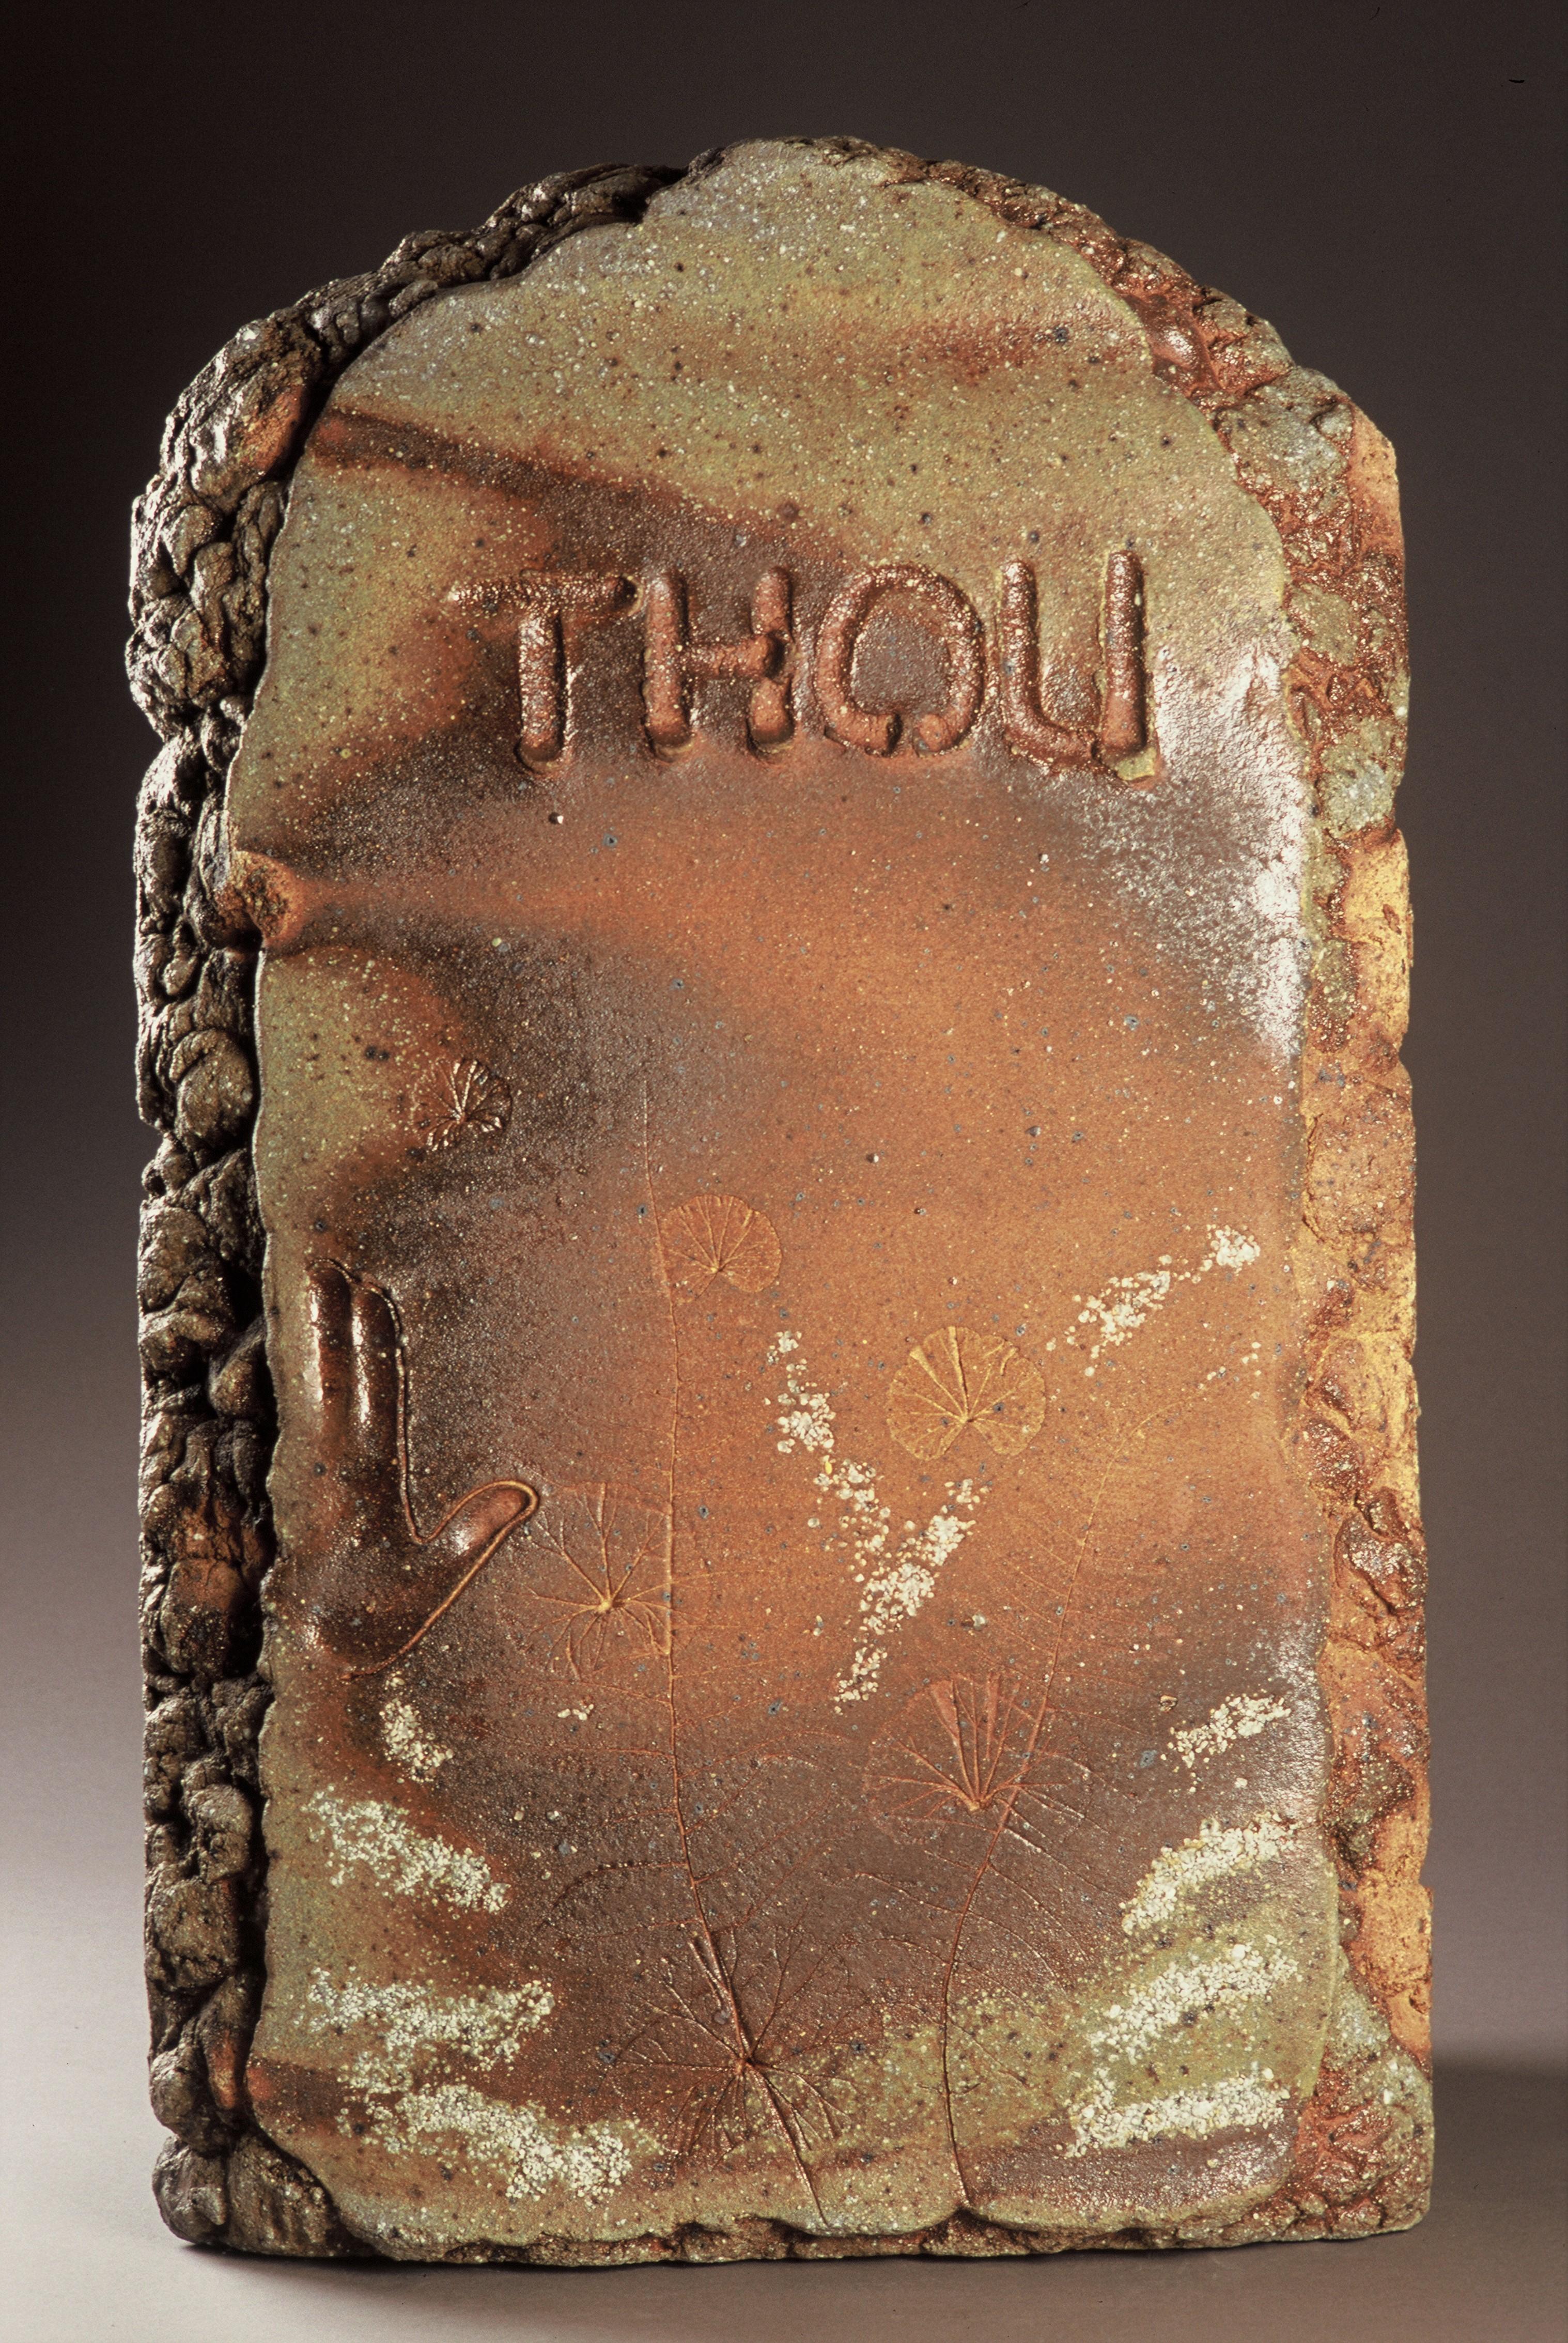 Tony Moore Figurative Sculpture - Ceramic wood-fired sculpture: 'Thou'